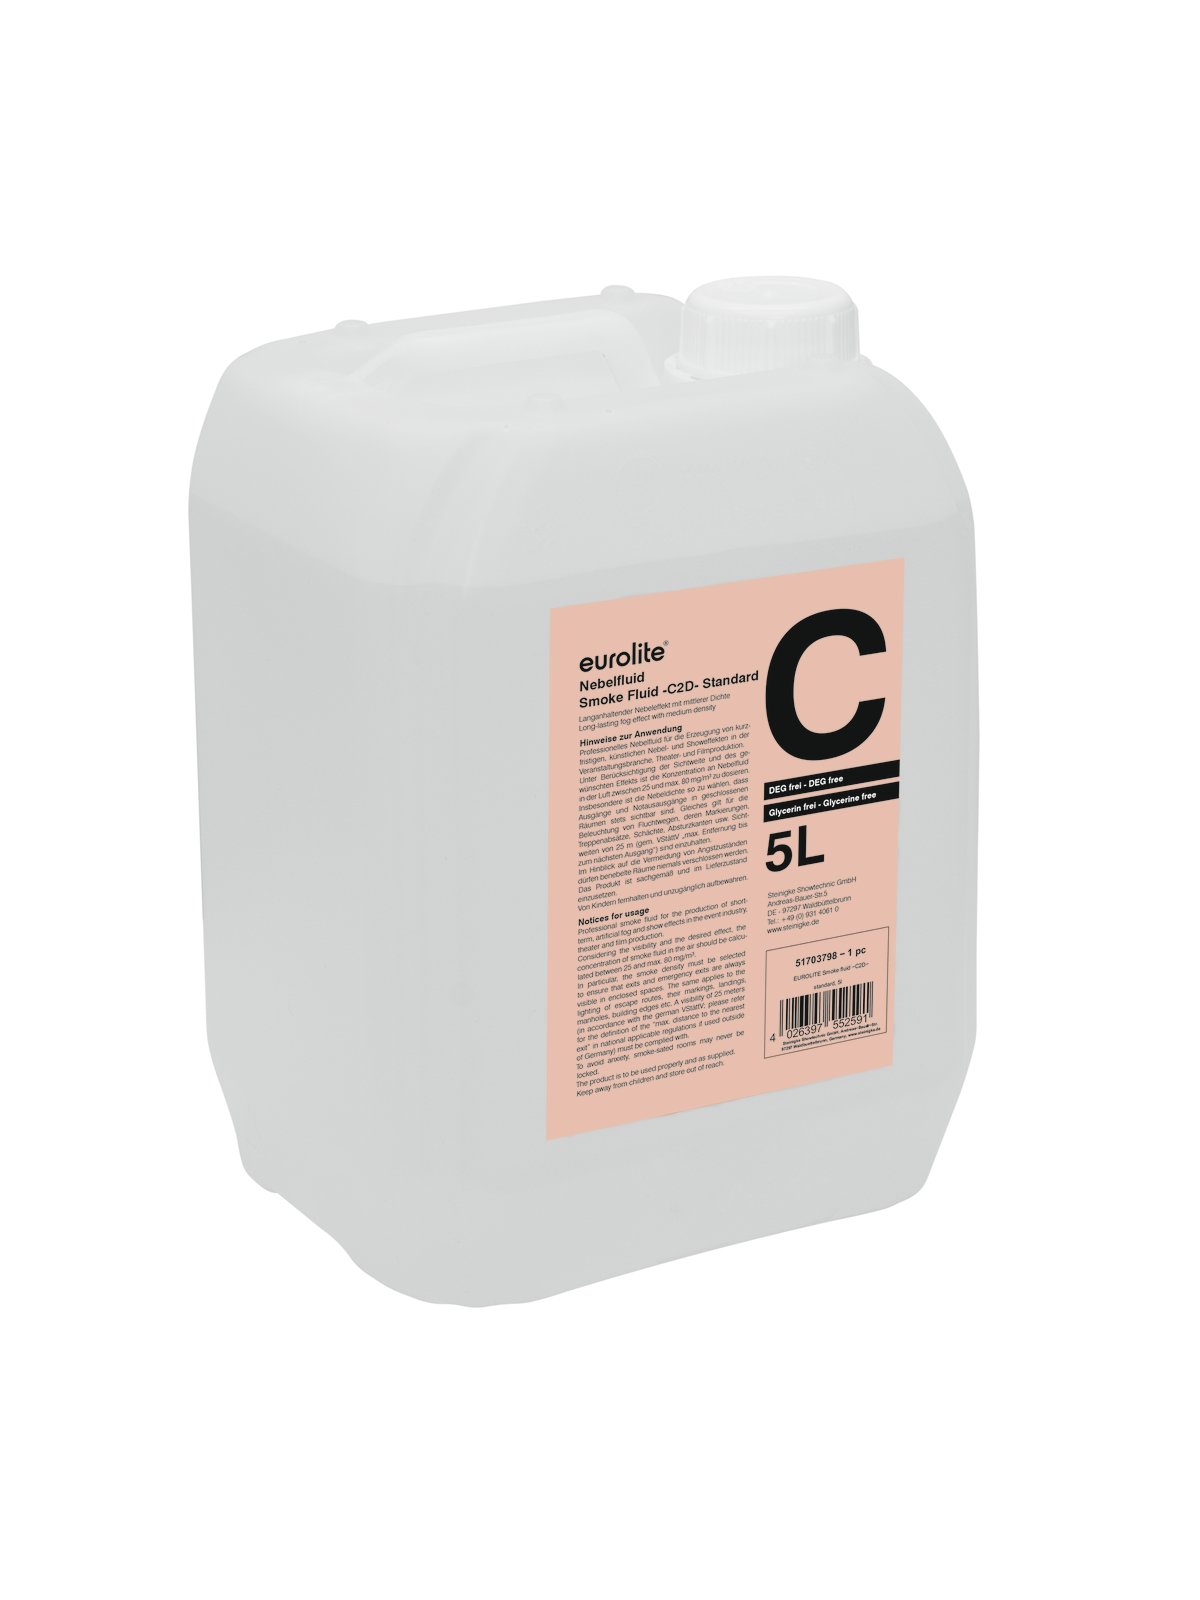 Smoke Fluid C2D-Standart Nebelfluid 5L - Eurolite 